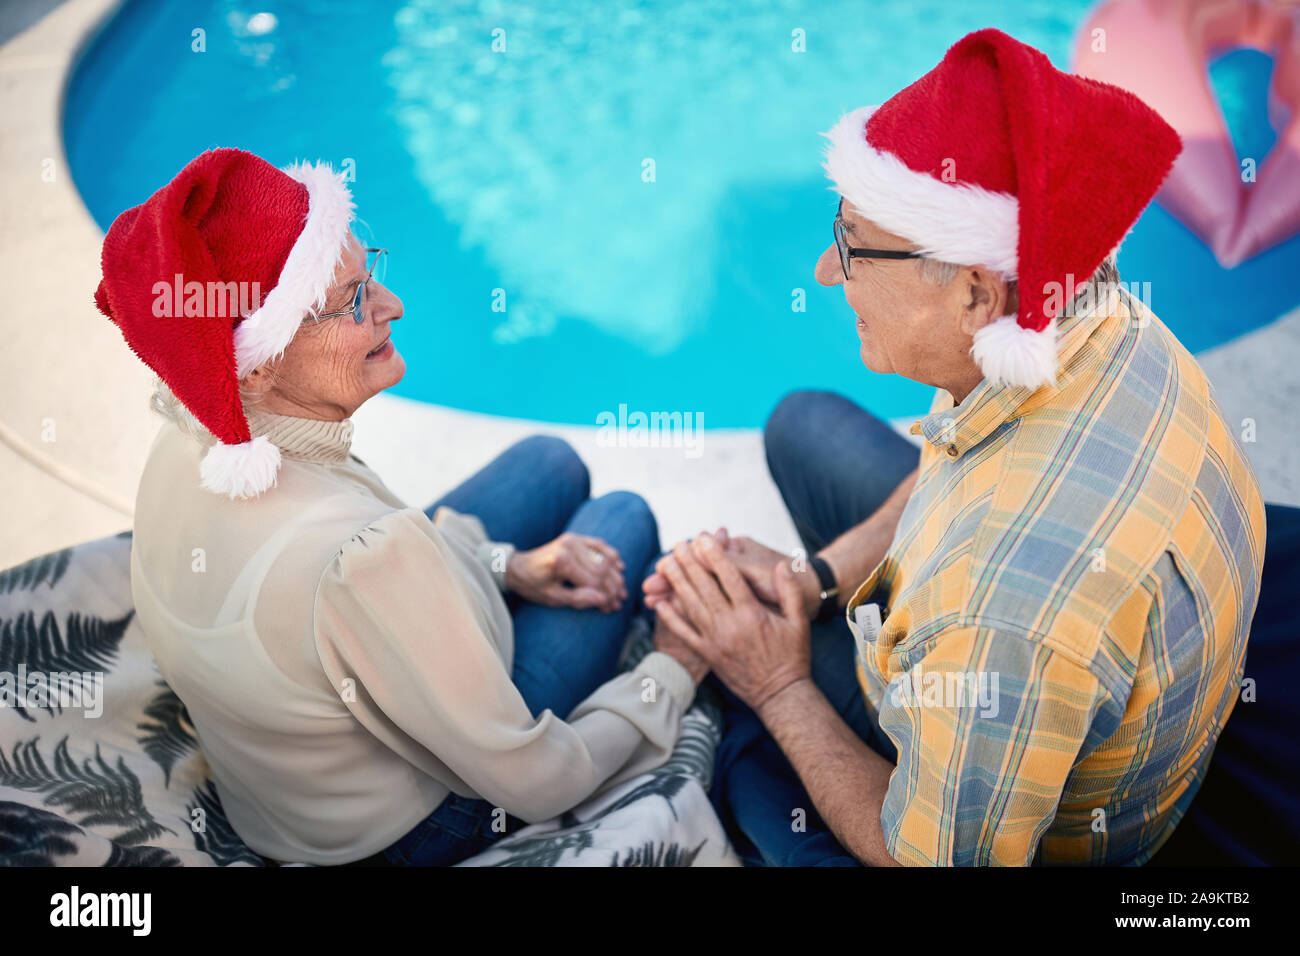 loving smiling senior man and woman together celebrating Christmas Stock Photo